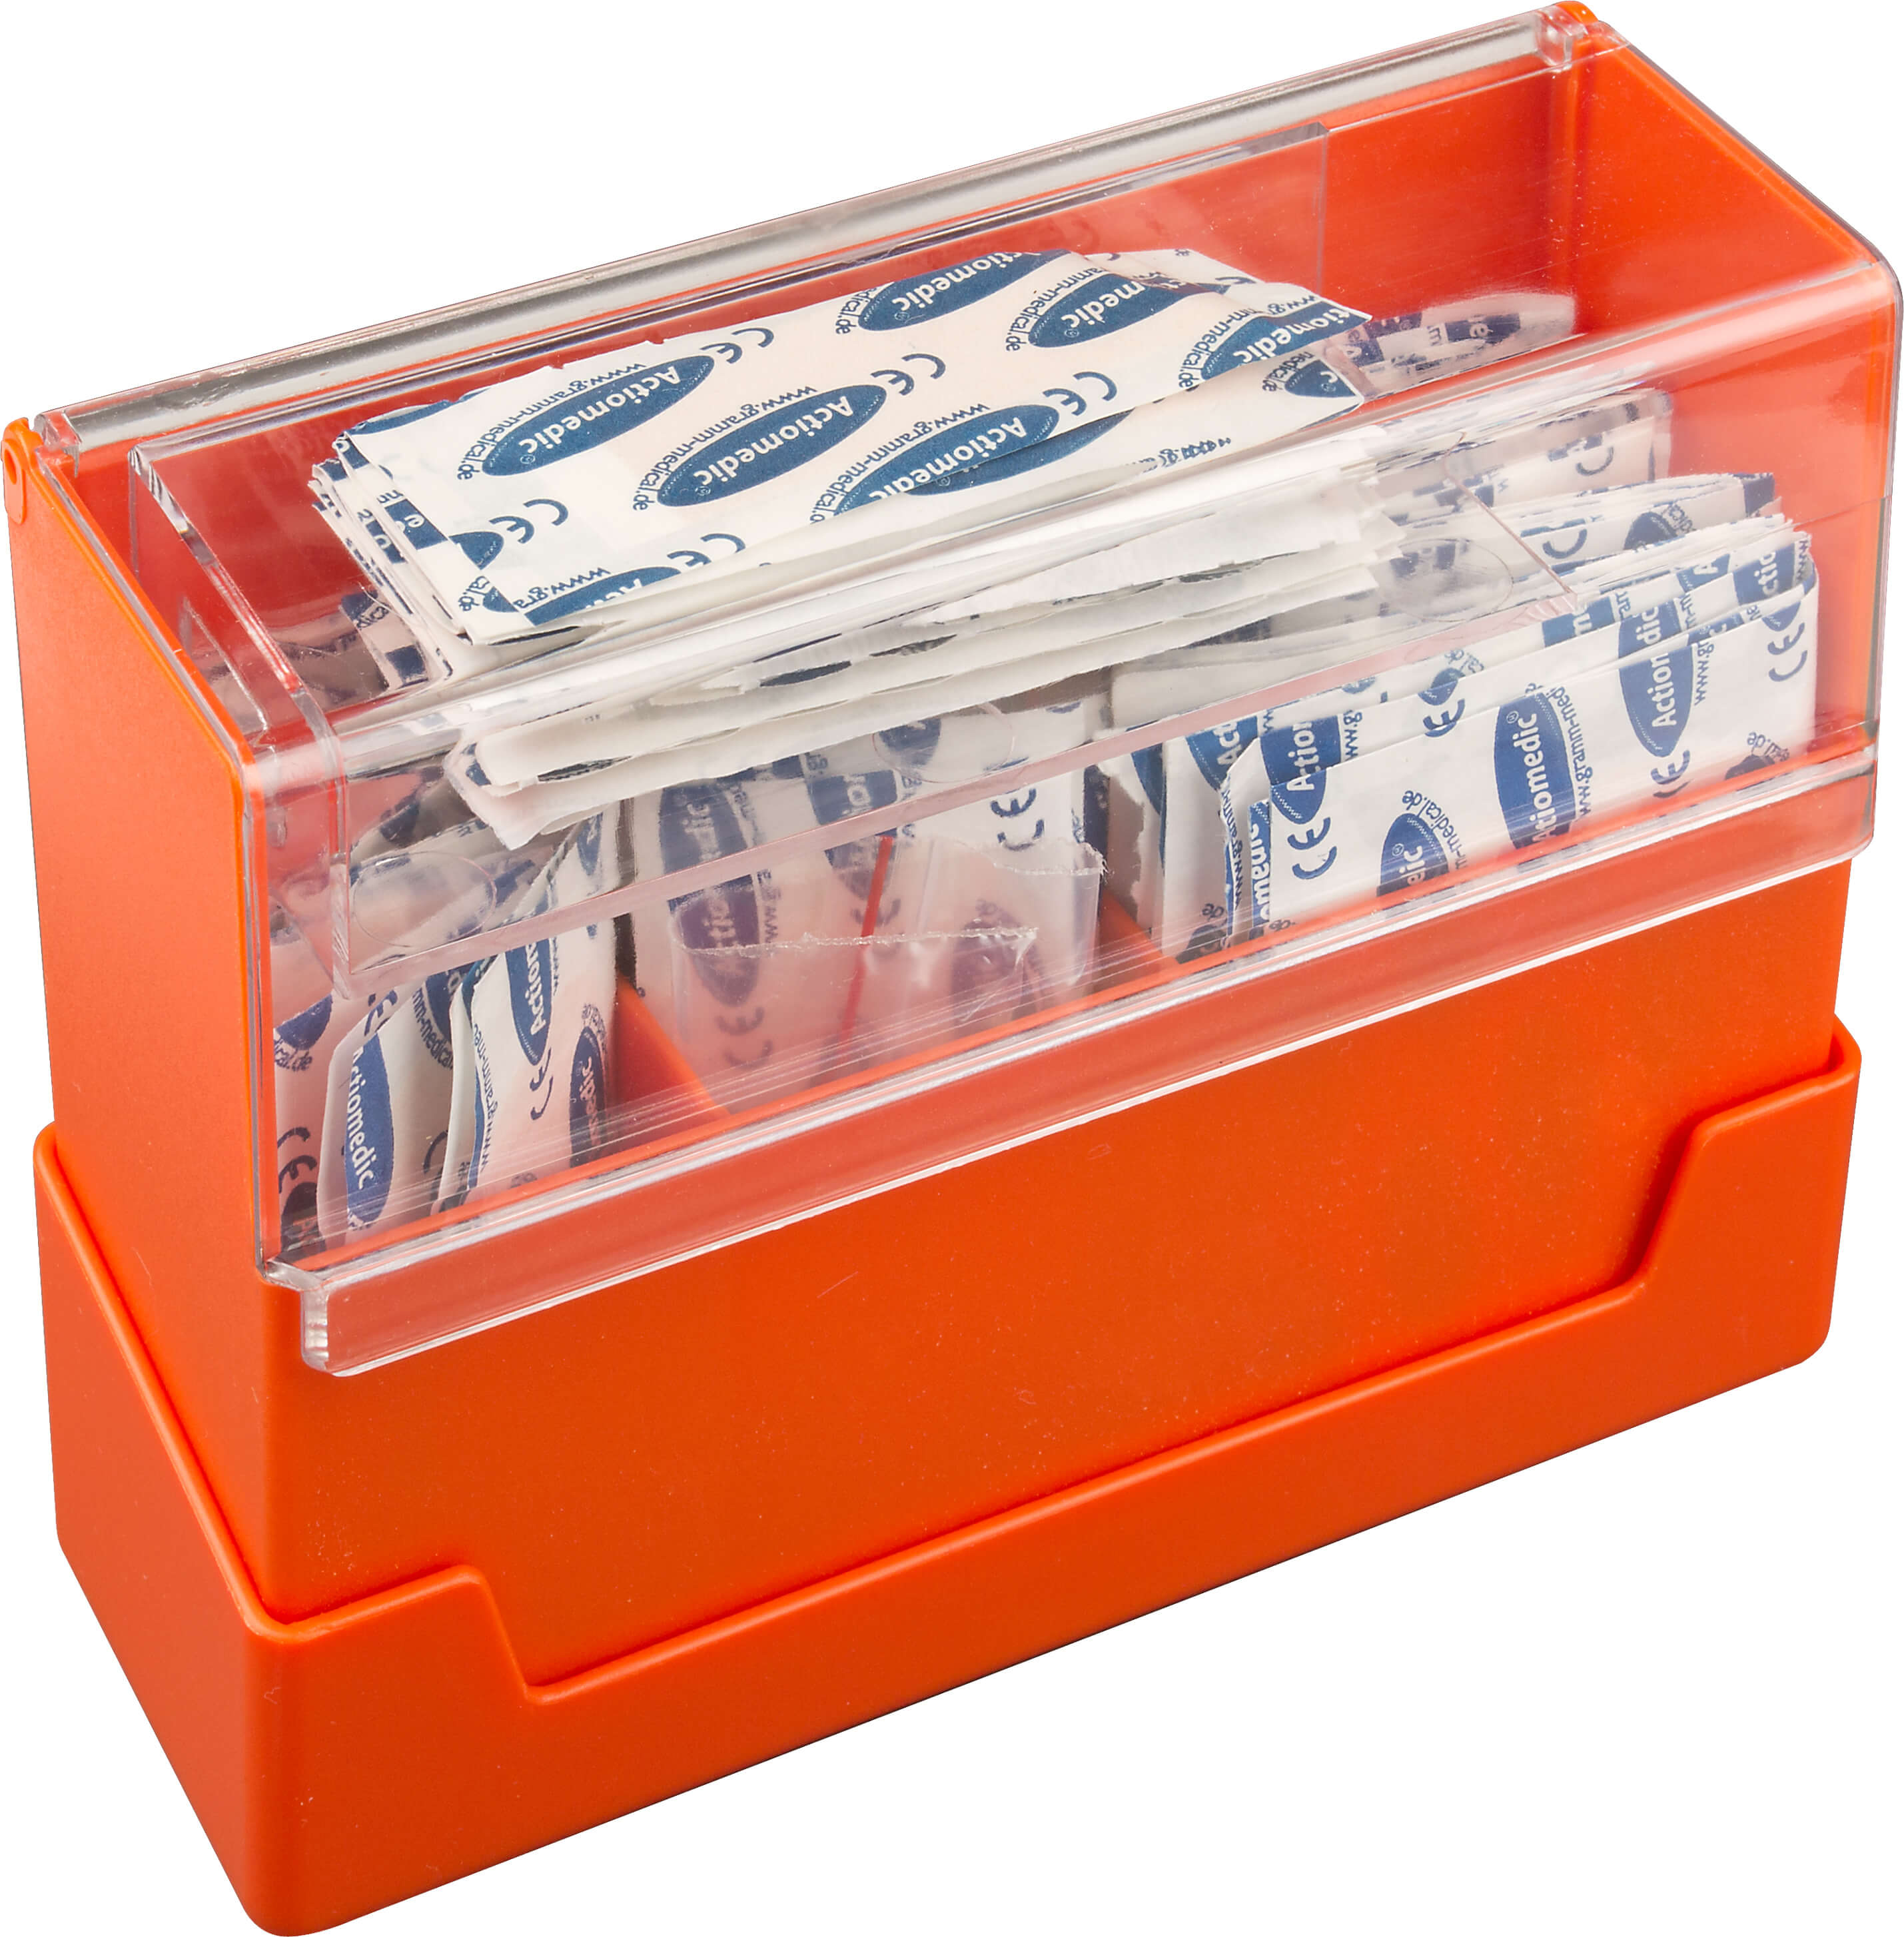 Band-aid dispenser, Elastic - Actiomedic, orange, 100Stk.